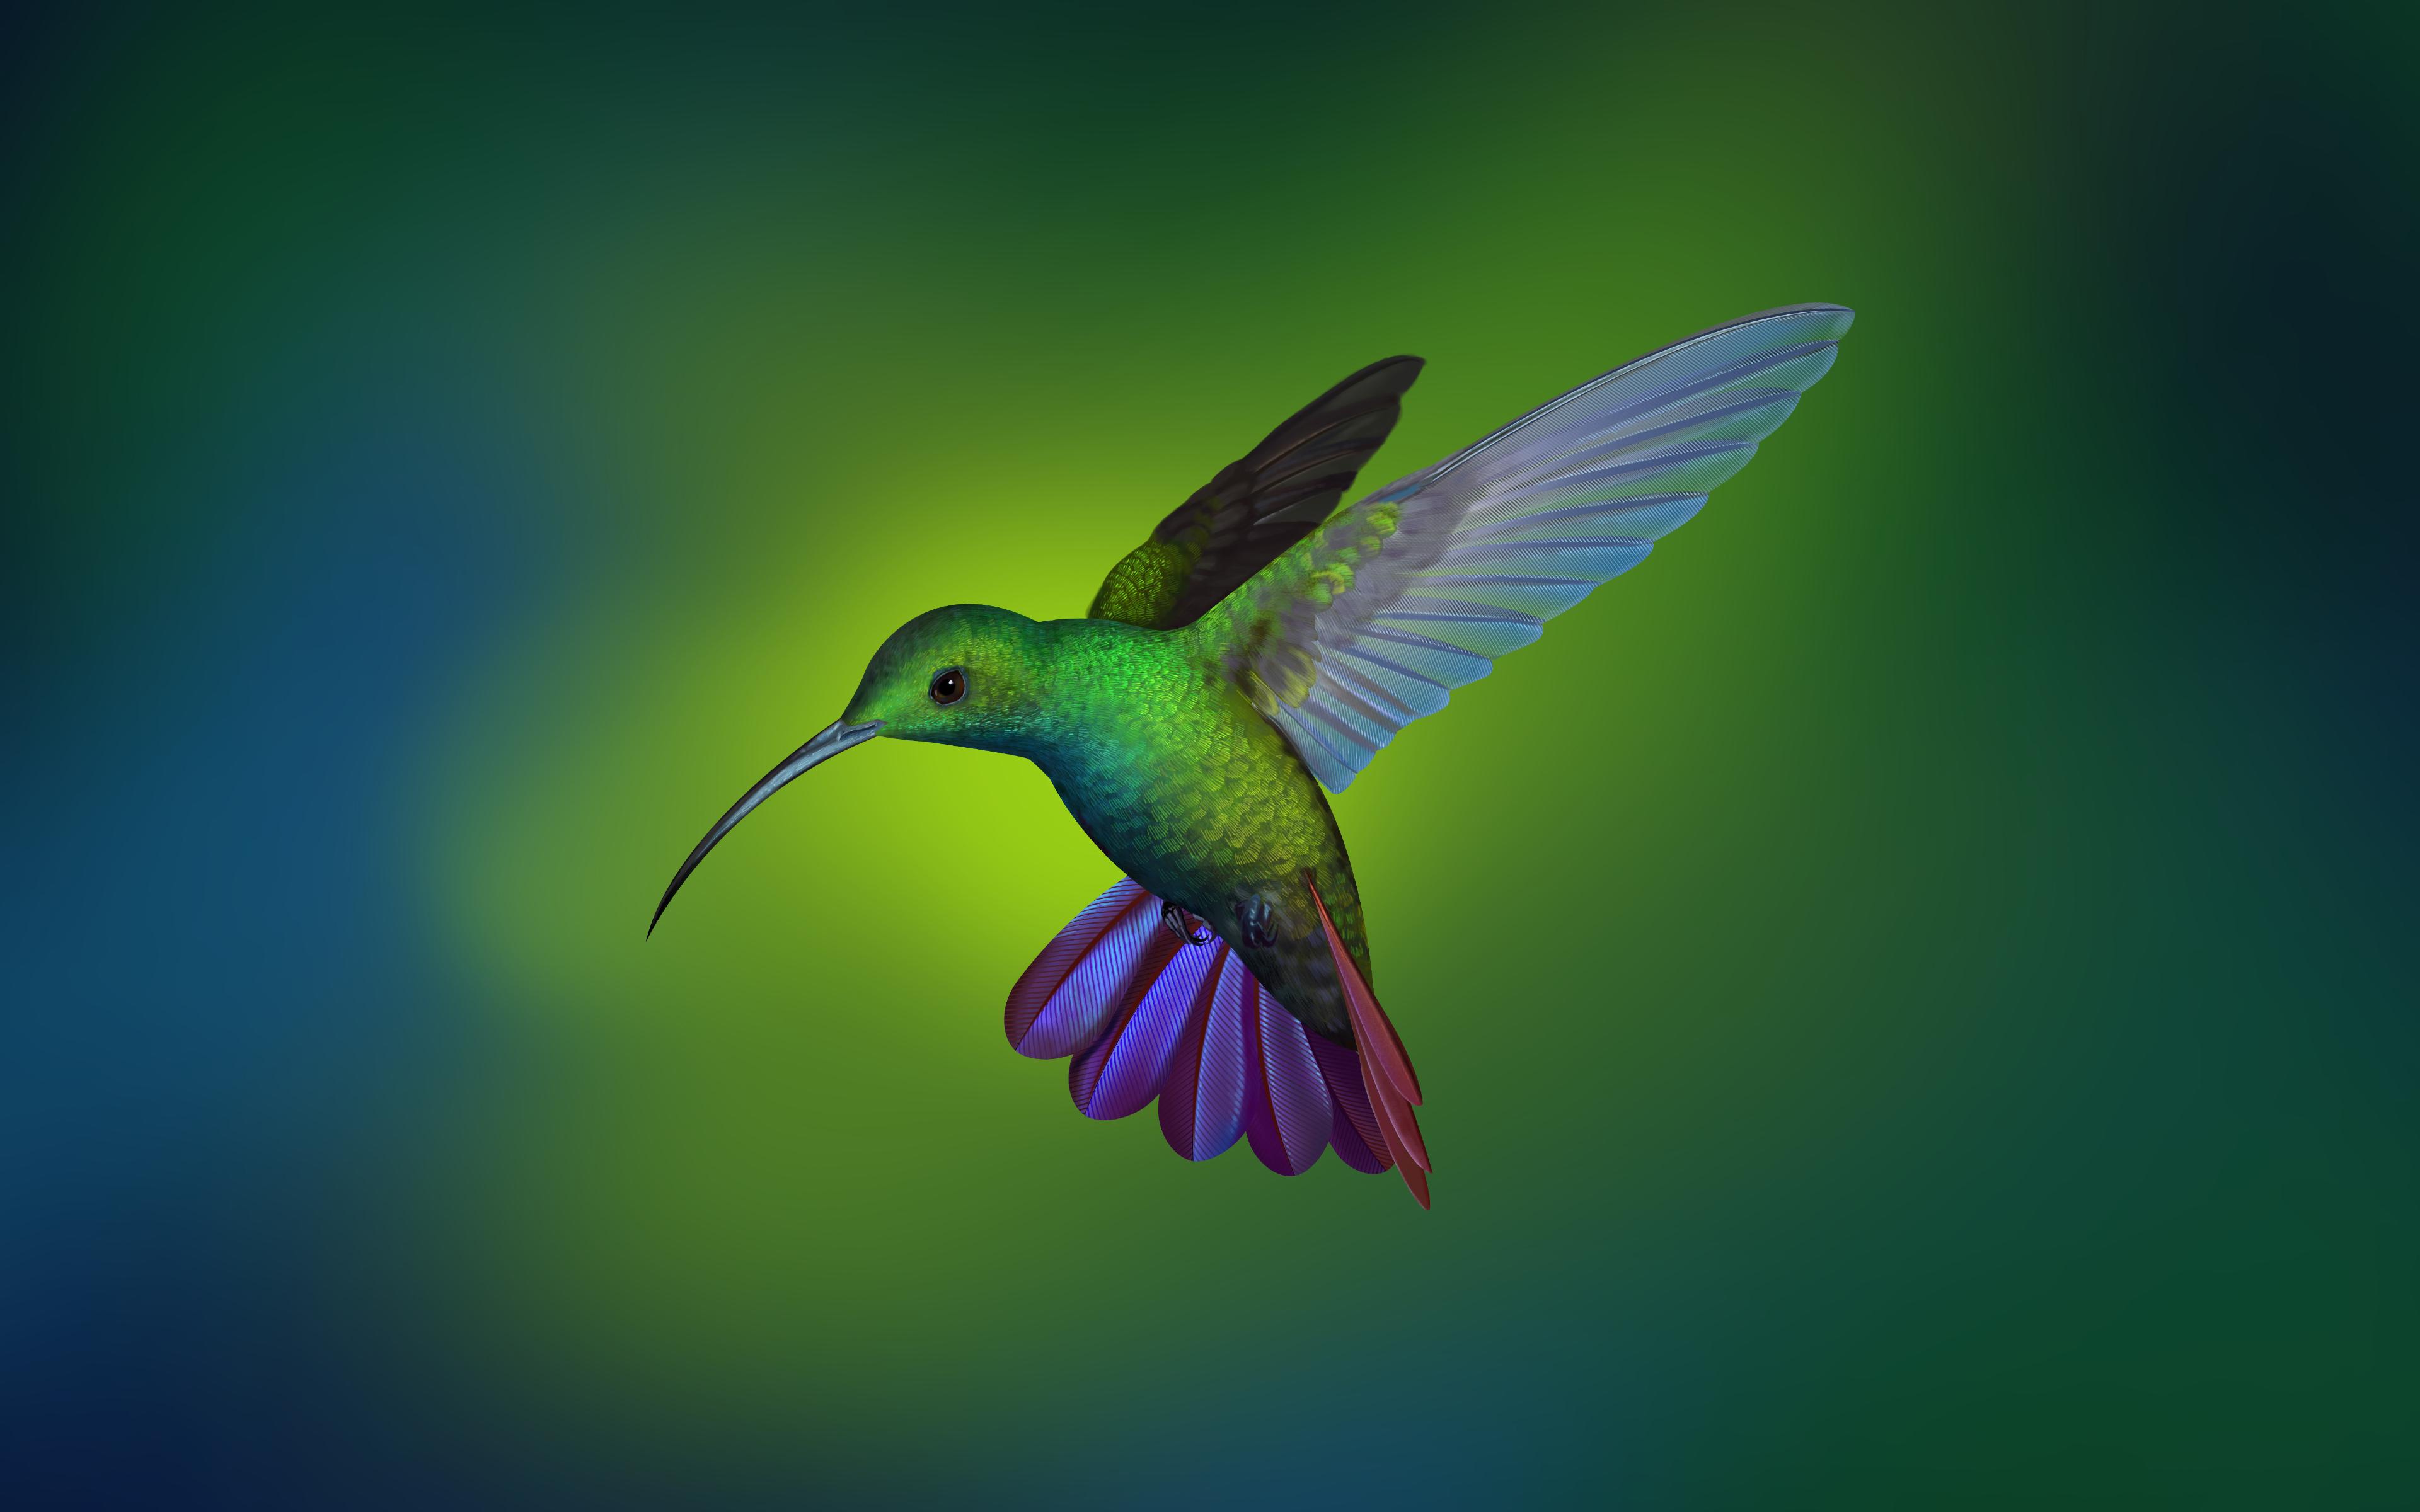 Hummingbird 4K wallpaper for your desktop or mobile screen free